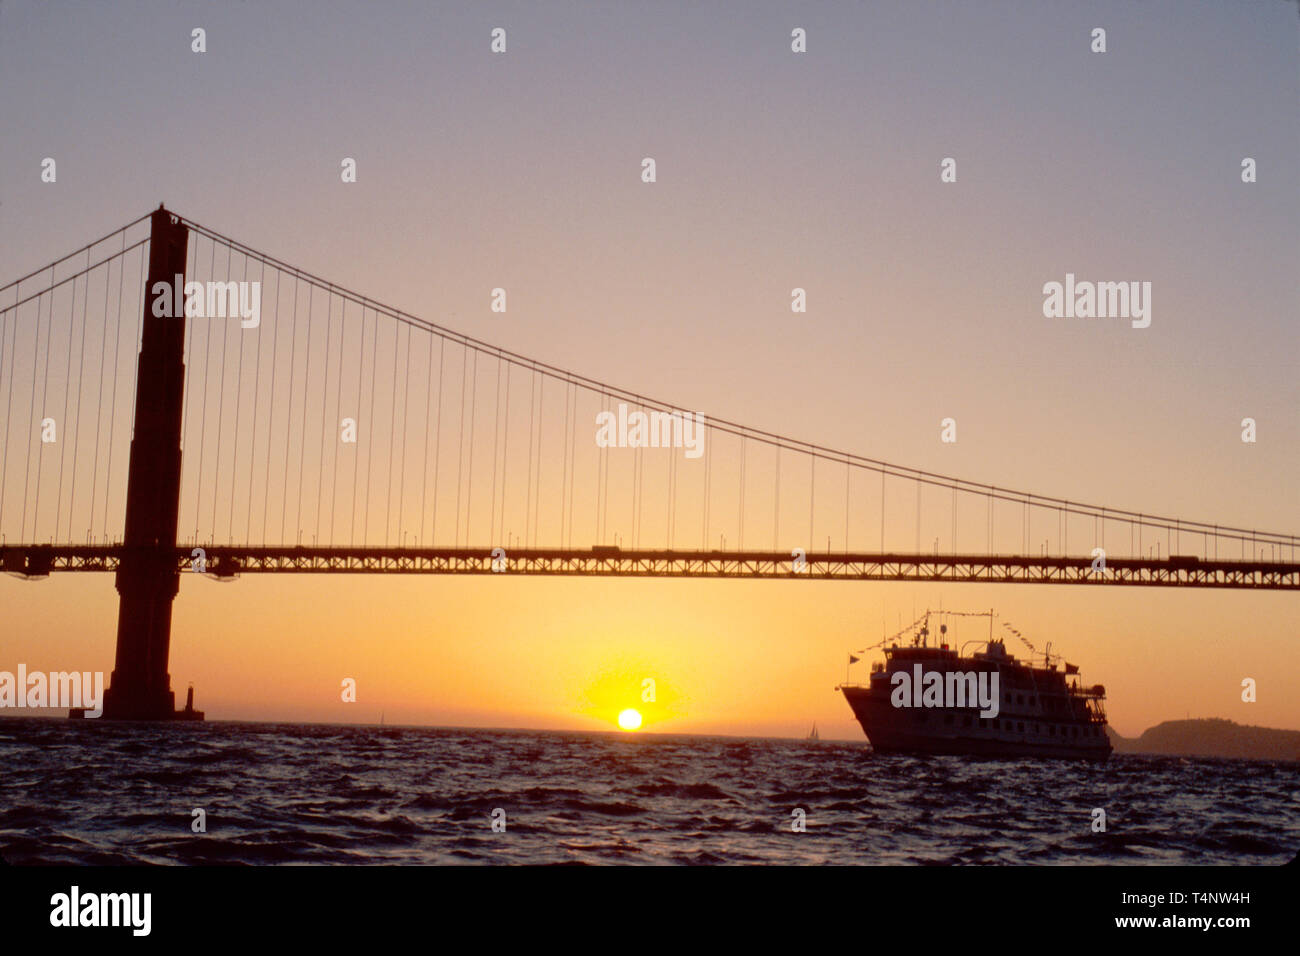 California San Francisco San Francisco Bay Golden Gate Bridge, cavalcavia, collegamento, collegamento, nave da crociera Spirit of Discovery, barca passeggeri, nave, barca, tran Foto Stock